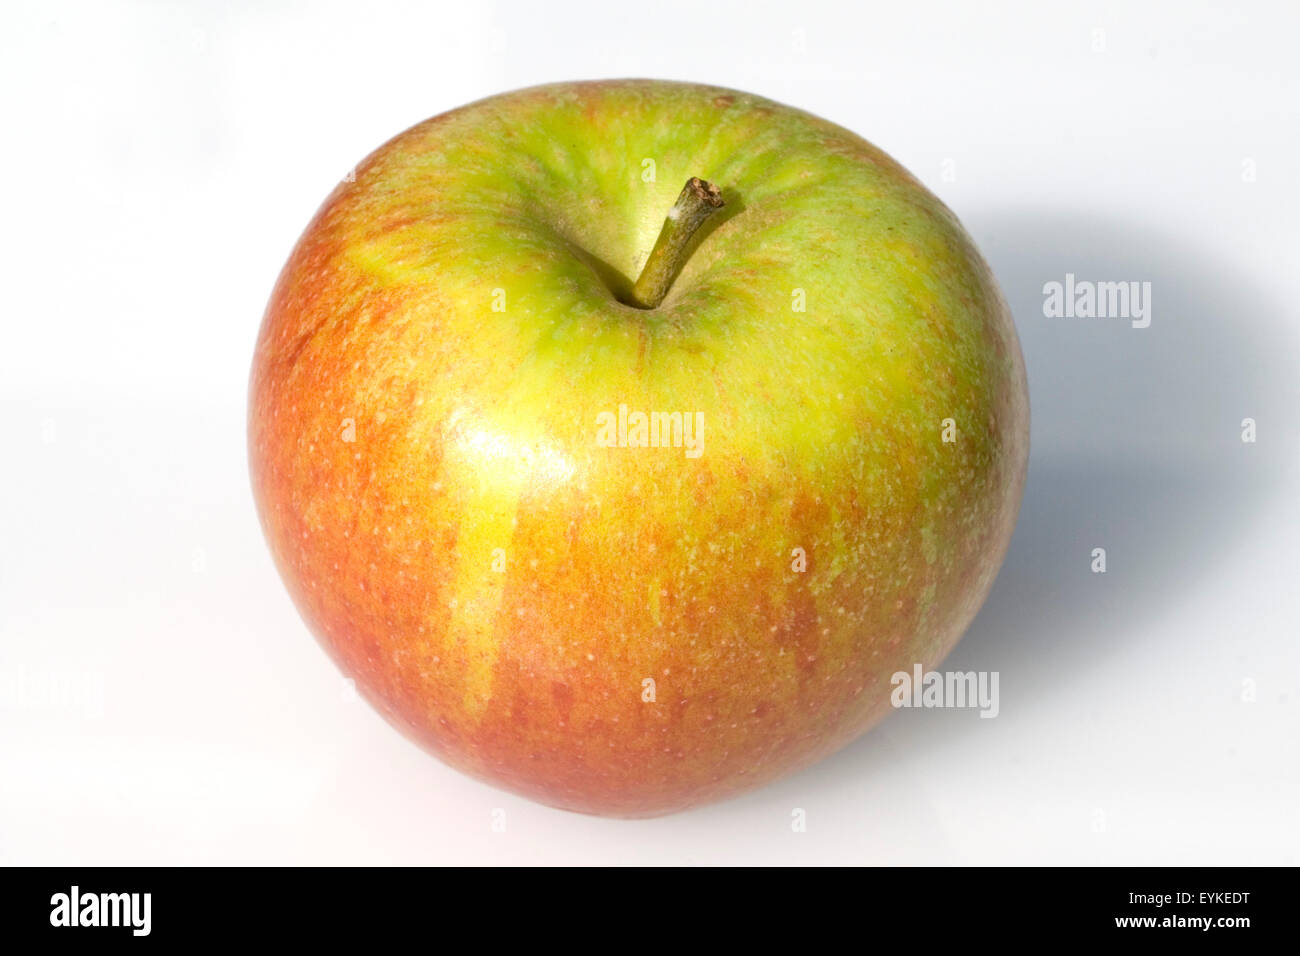 Cox Orange; Apfel; Malus Domestica, Apfelsorte, Apfel, Kernobst, Obst, Stockfoto